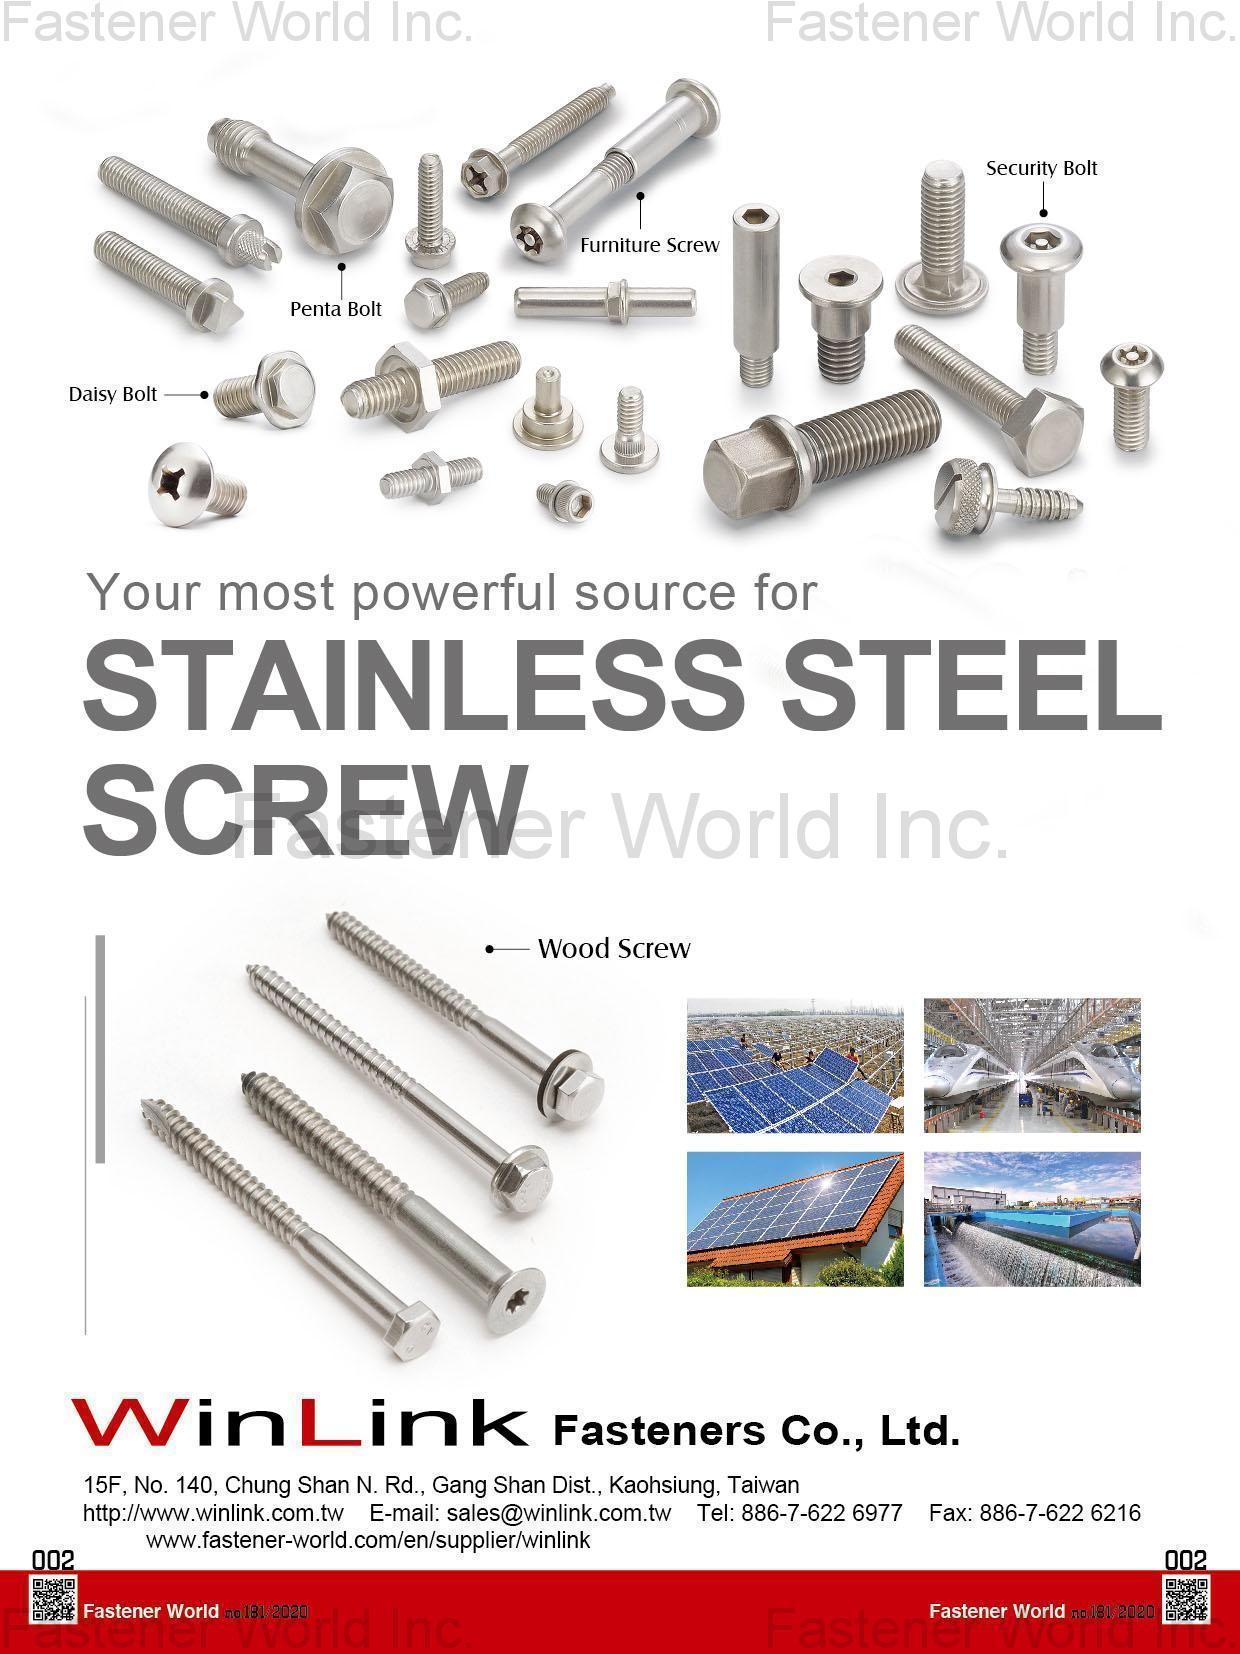 WINLINK FASTENERS CO., LTD.  , Stainless Steel Screw, Daisy Bolt, Penta Bolt, Furniture Screw, Security Bolt, Wood Screw , Security Bolts